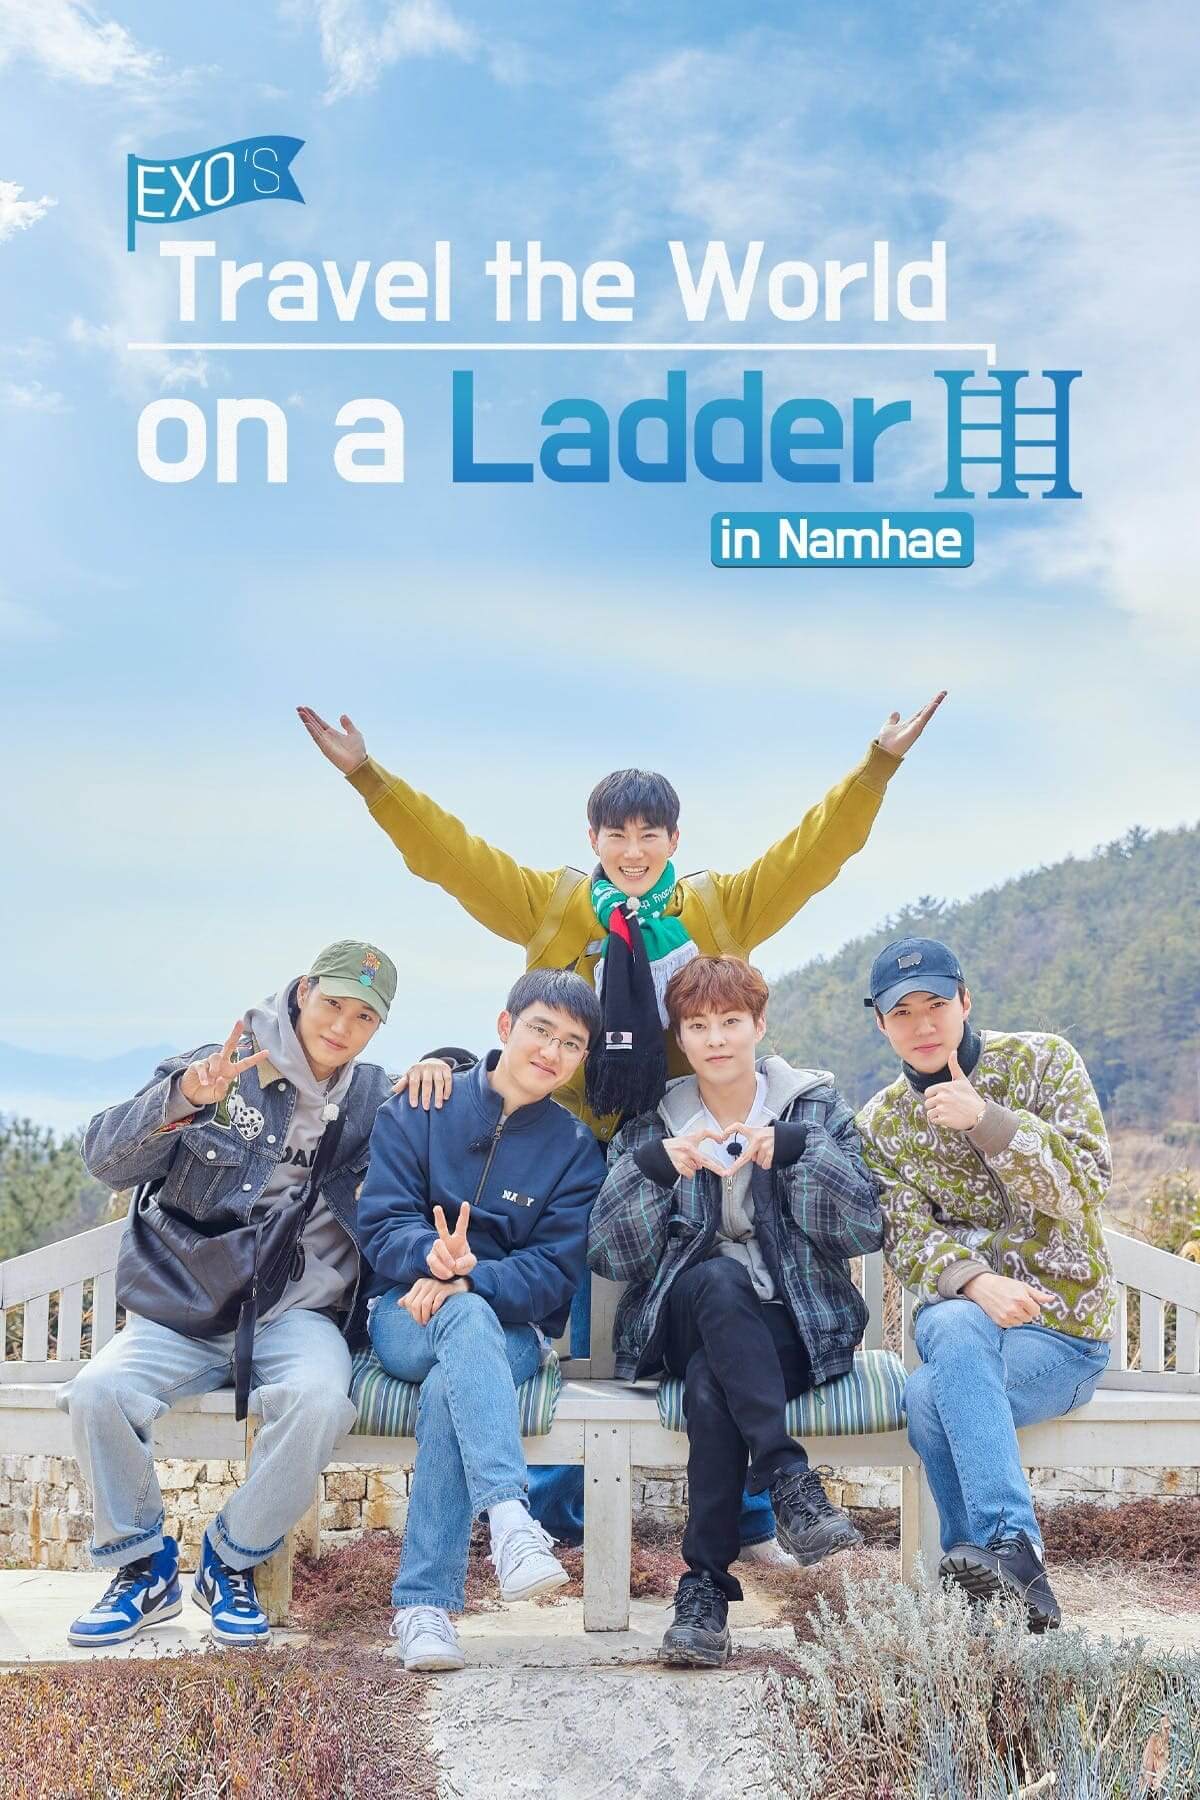 نردبان اکسو (EXO’s Travel the World on a Ladder in Kaohsiung&Kenting)